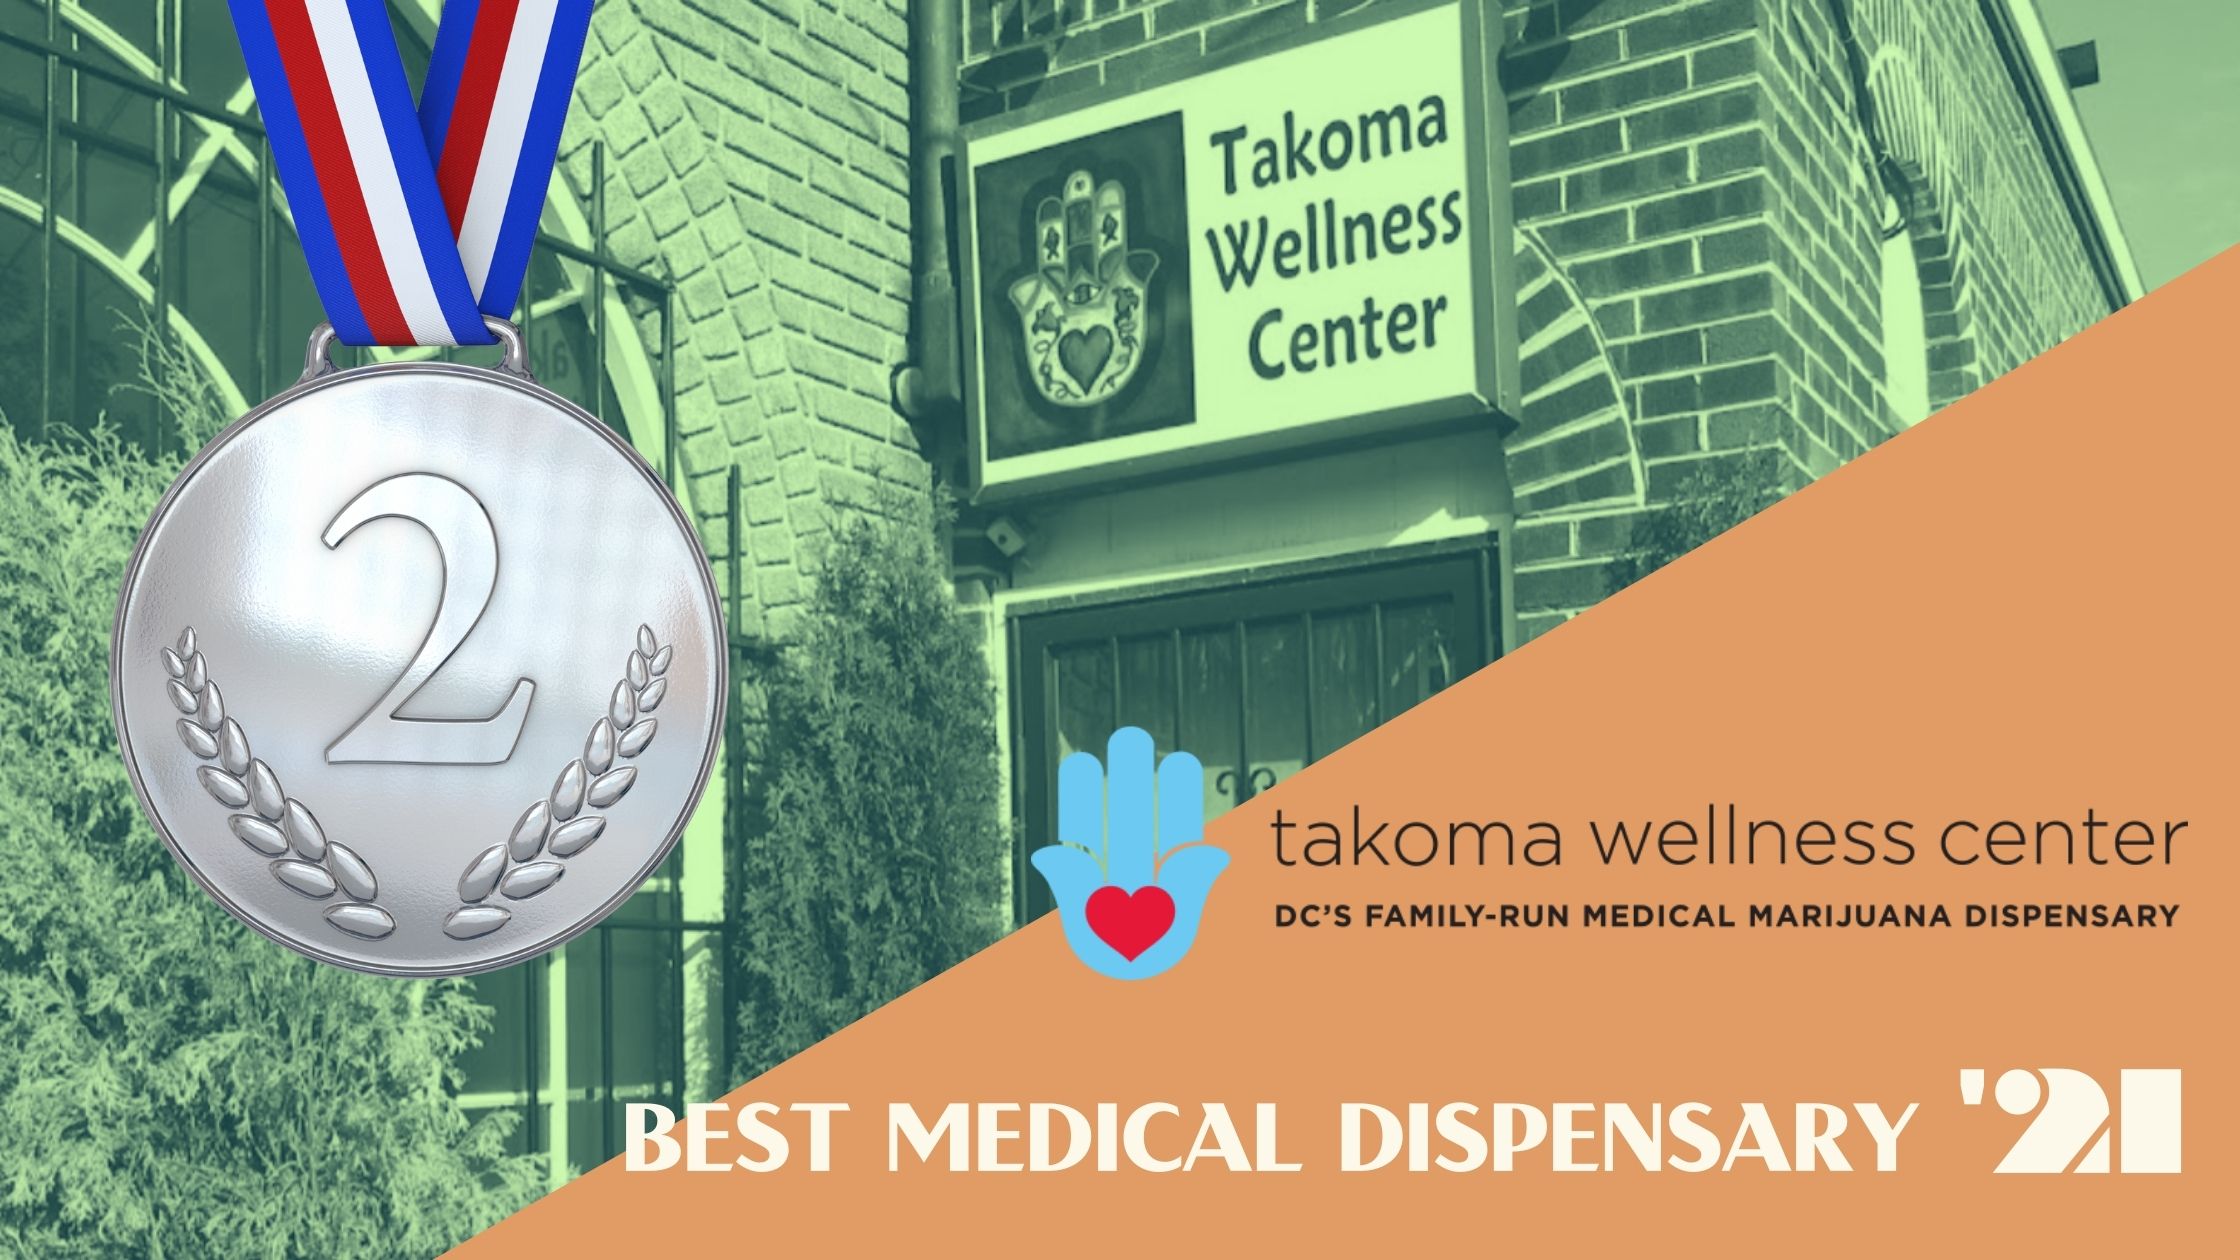 Best Medical Dispensary takoma